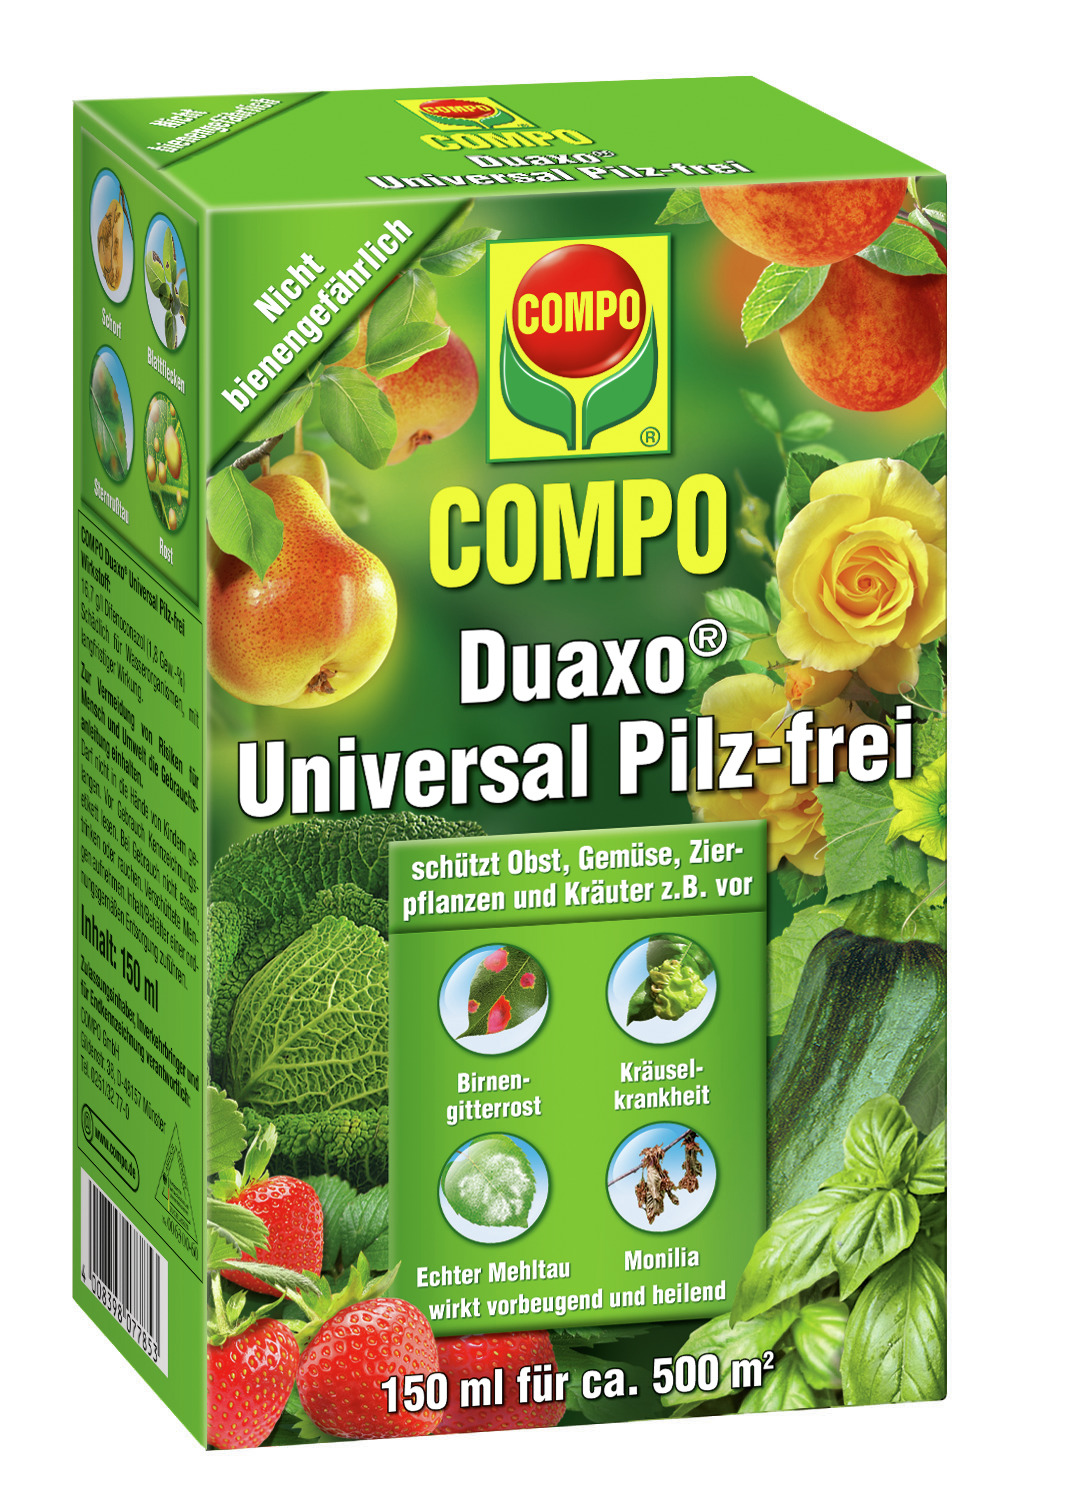 COMPO COMPO Duaxo Universal Pilz-frei 150ml Compo EREG -B4-